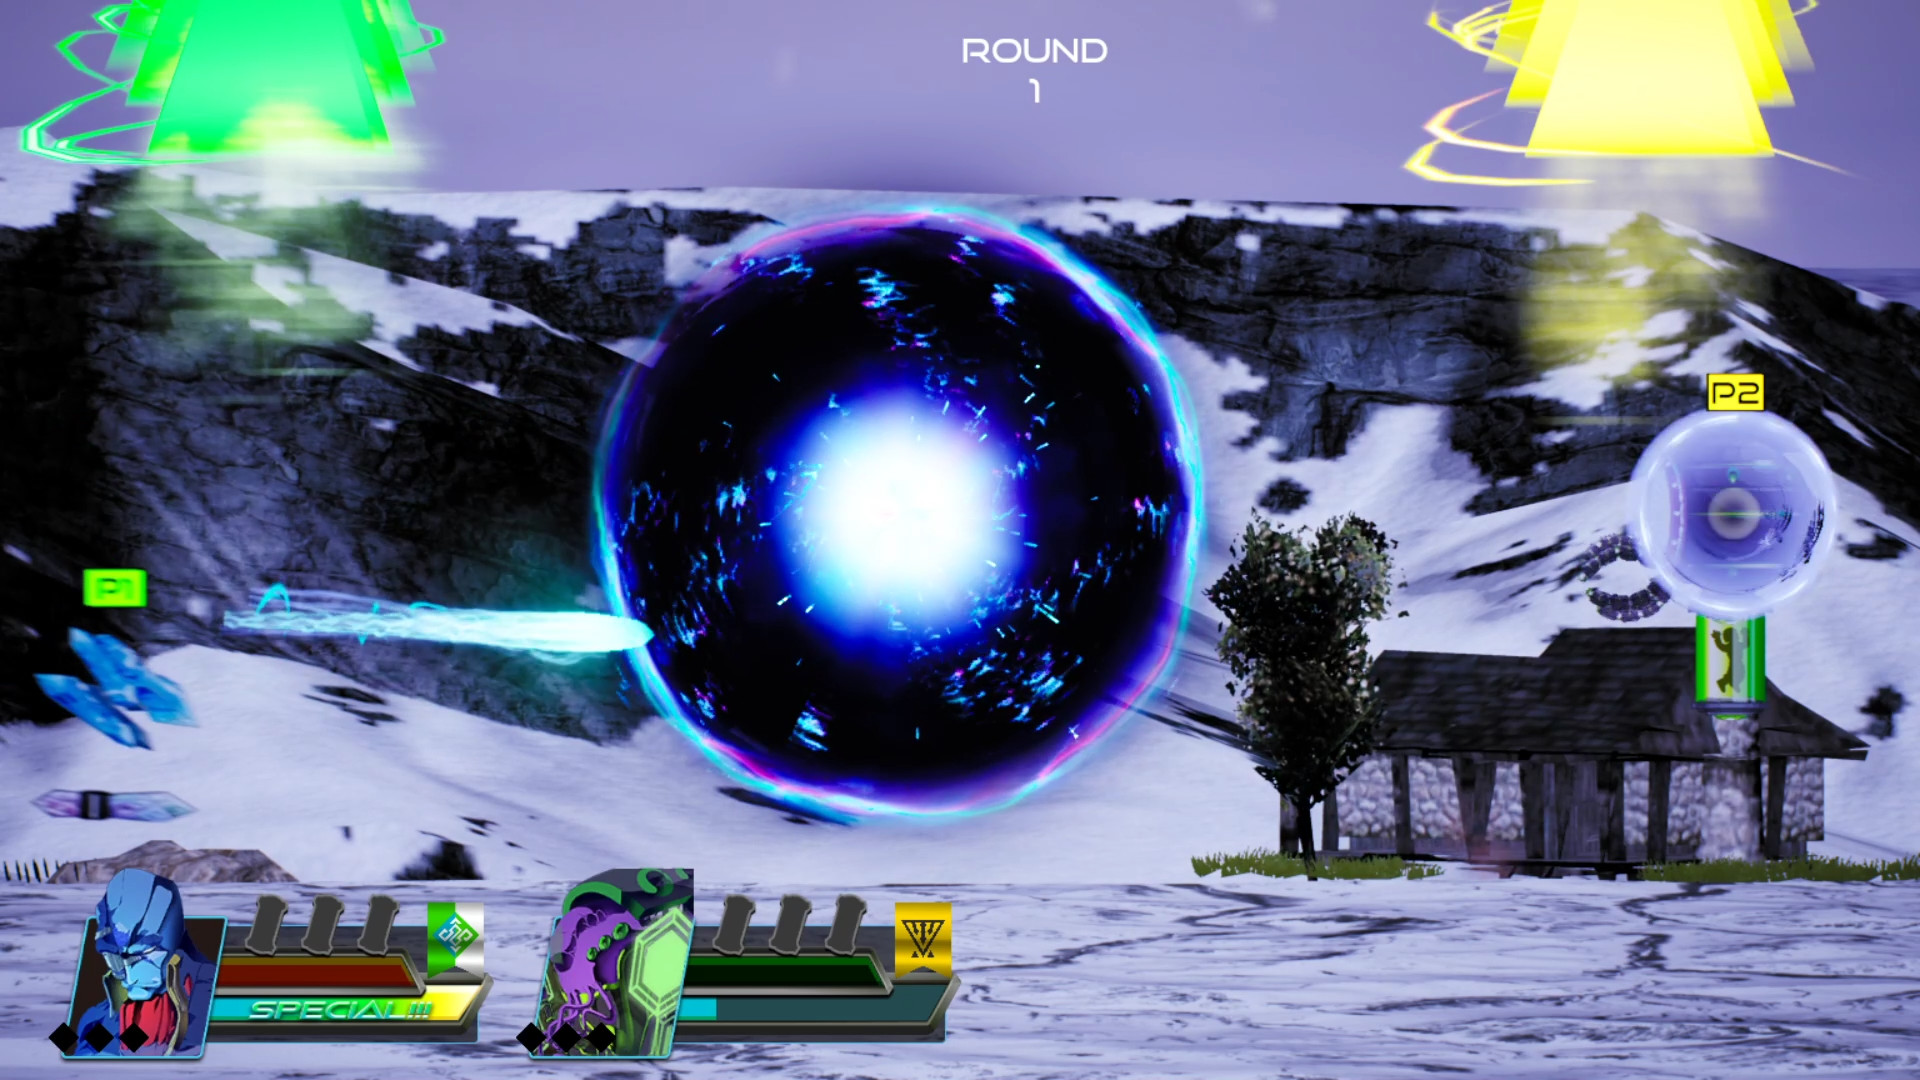 Nebulas Lasso screenshot